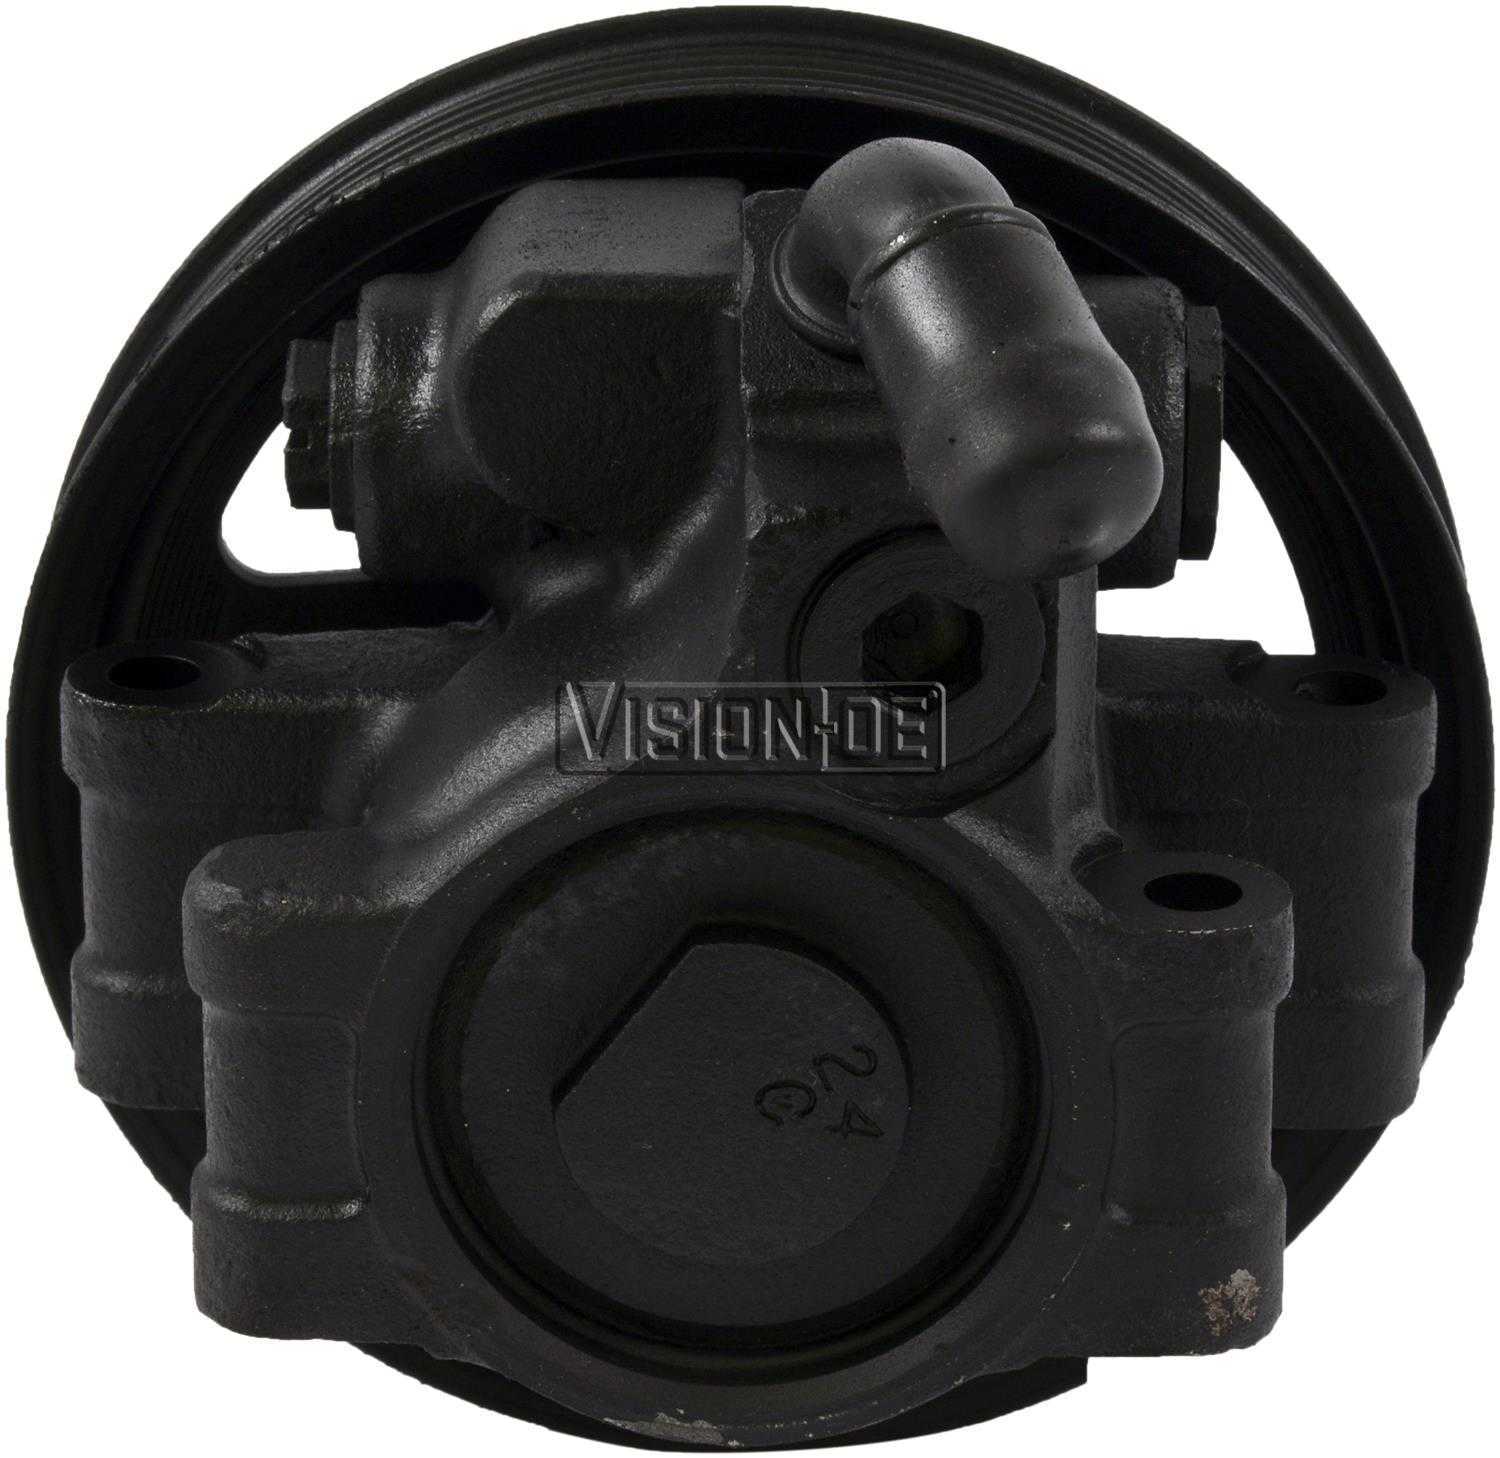 VISION-OE - Reman Power Steering Pump - VOE 712-0121A1